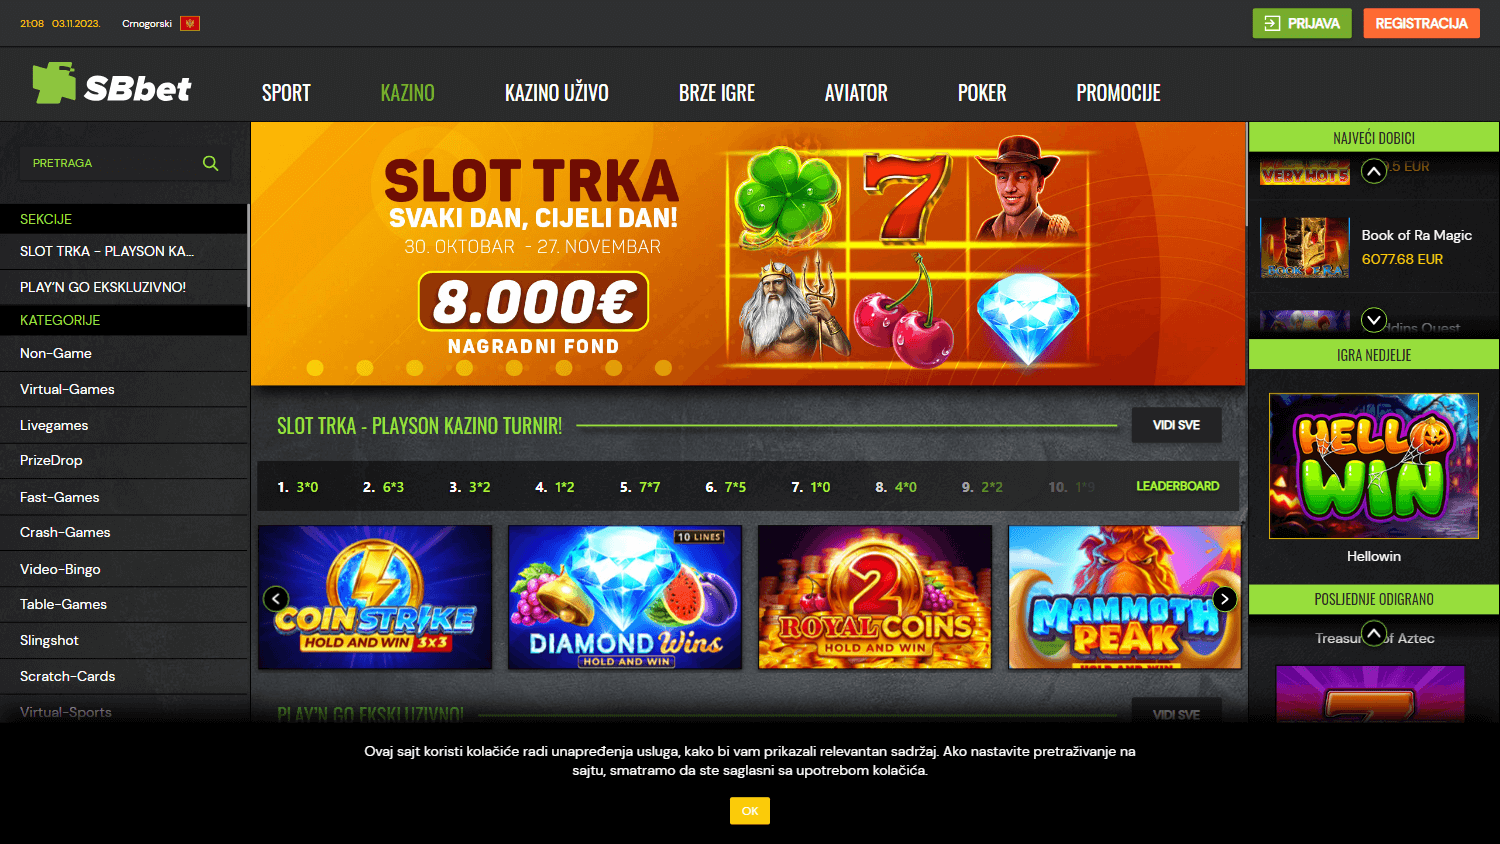 sbbet_casino_homepage_desktop